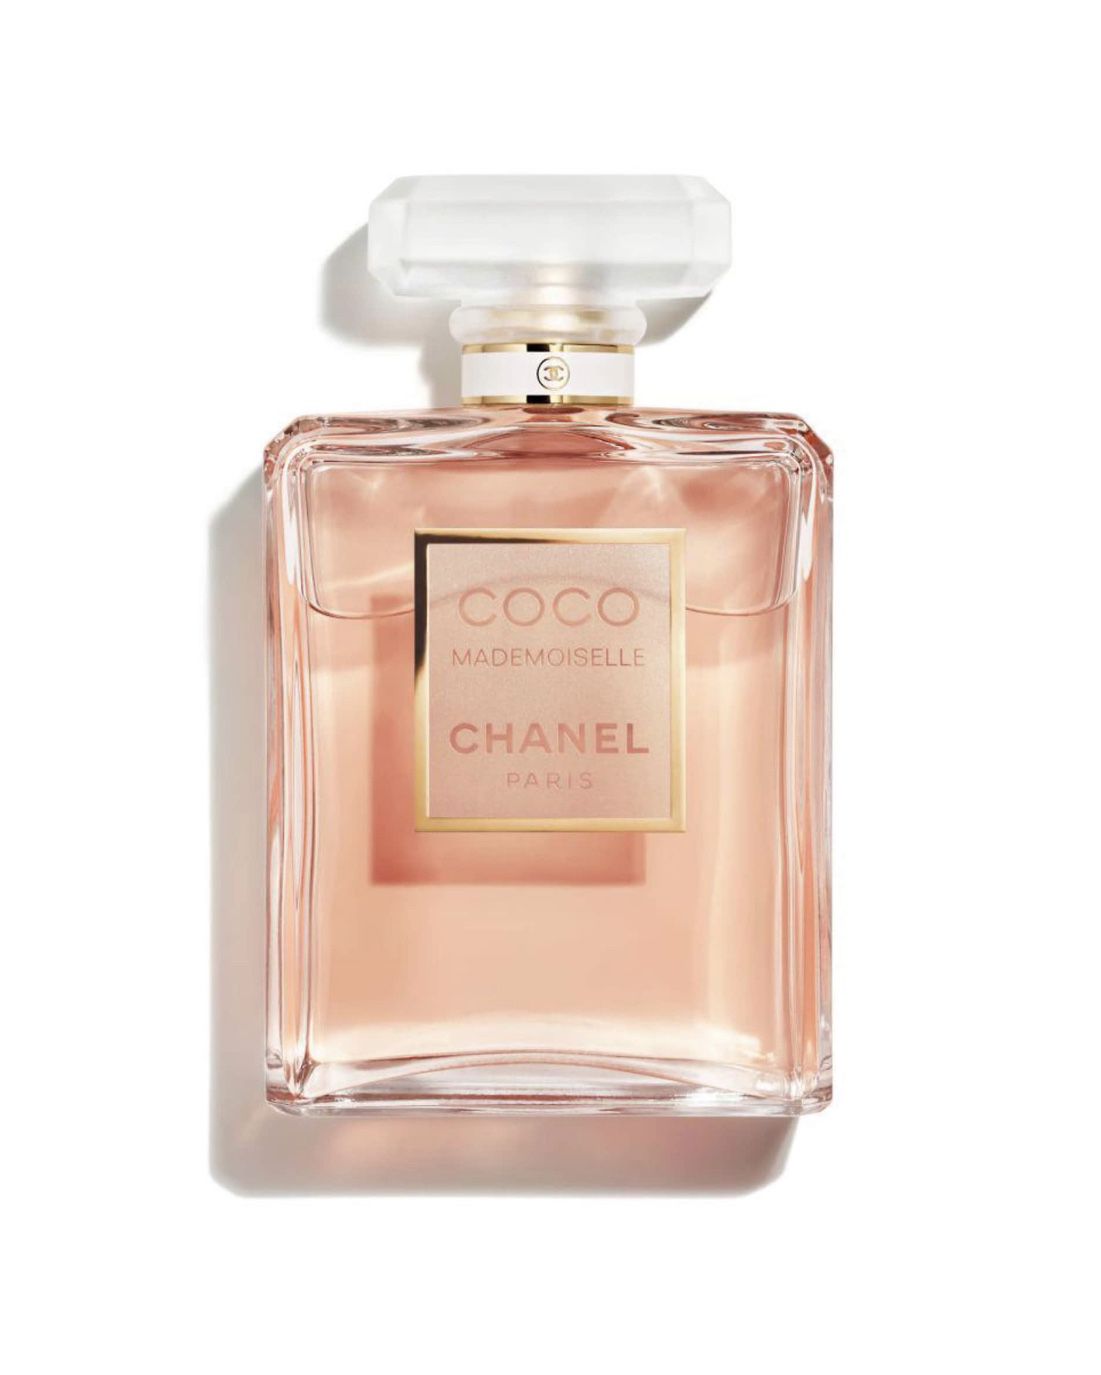 Chanel Coco Madmoiselle Eau De Parfum 3.4 Oz for Sale in San Diego, CA -  OfferUp